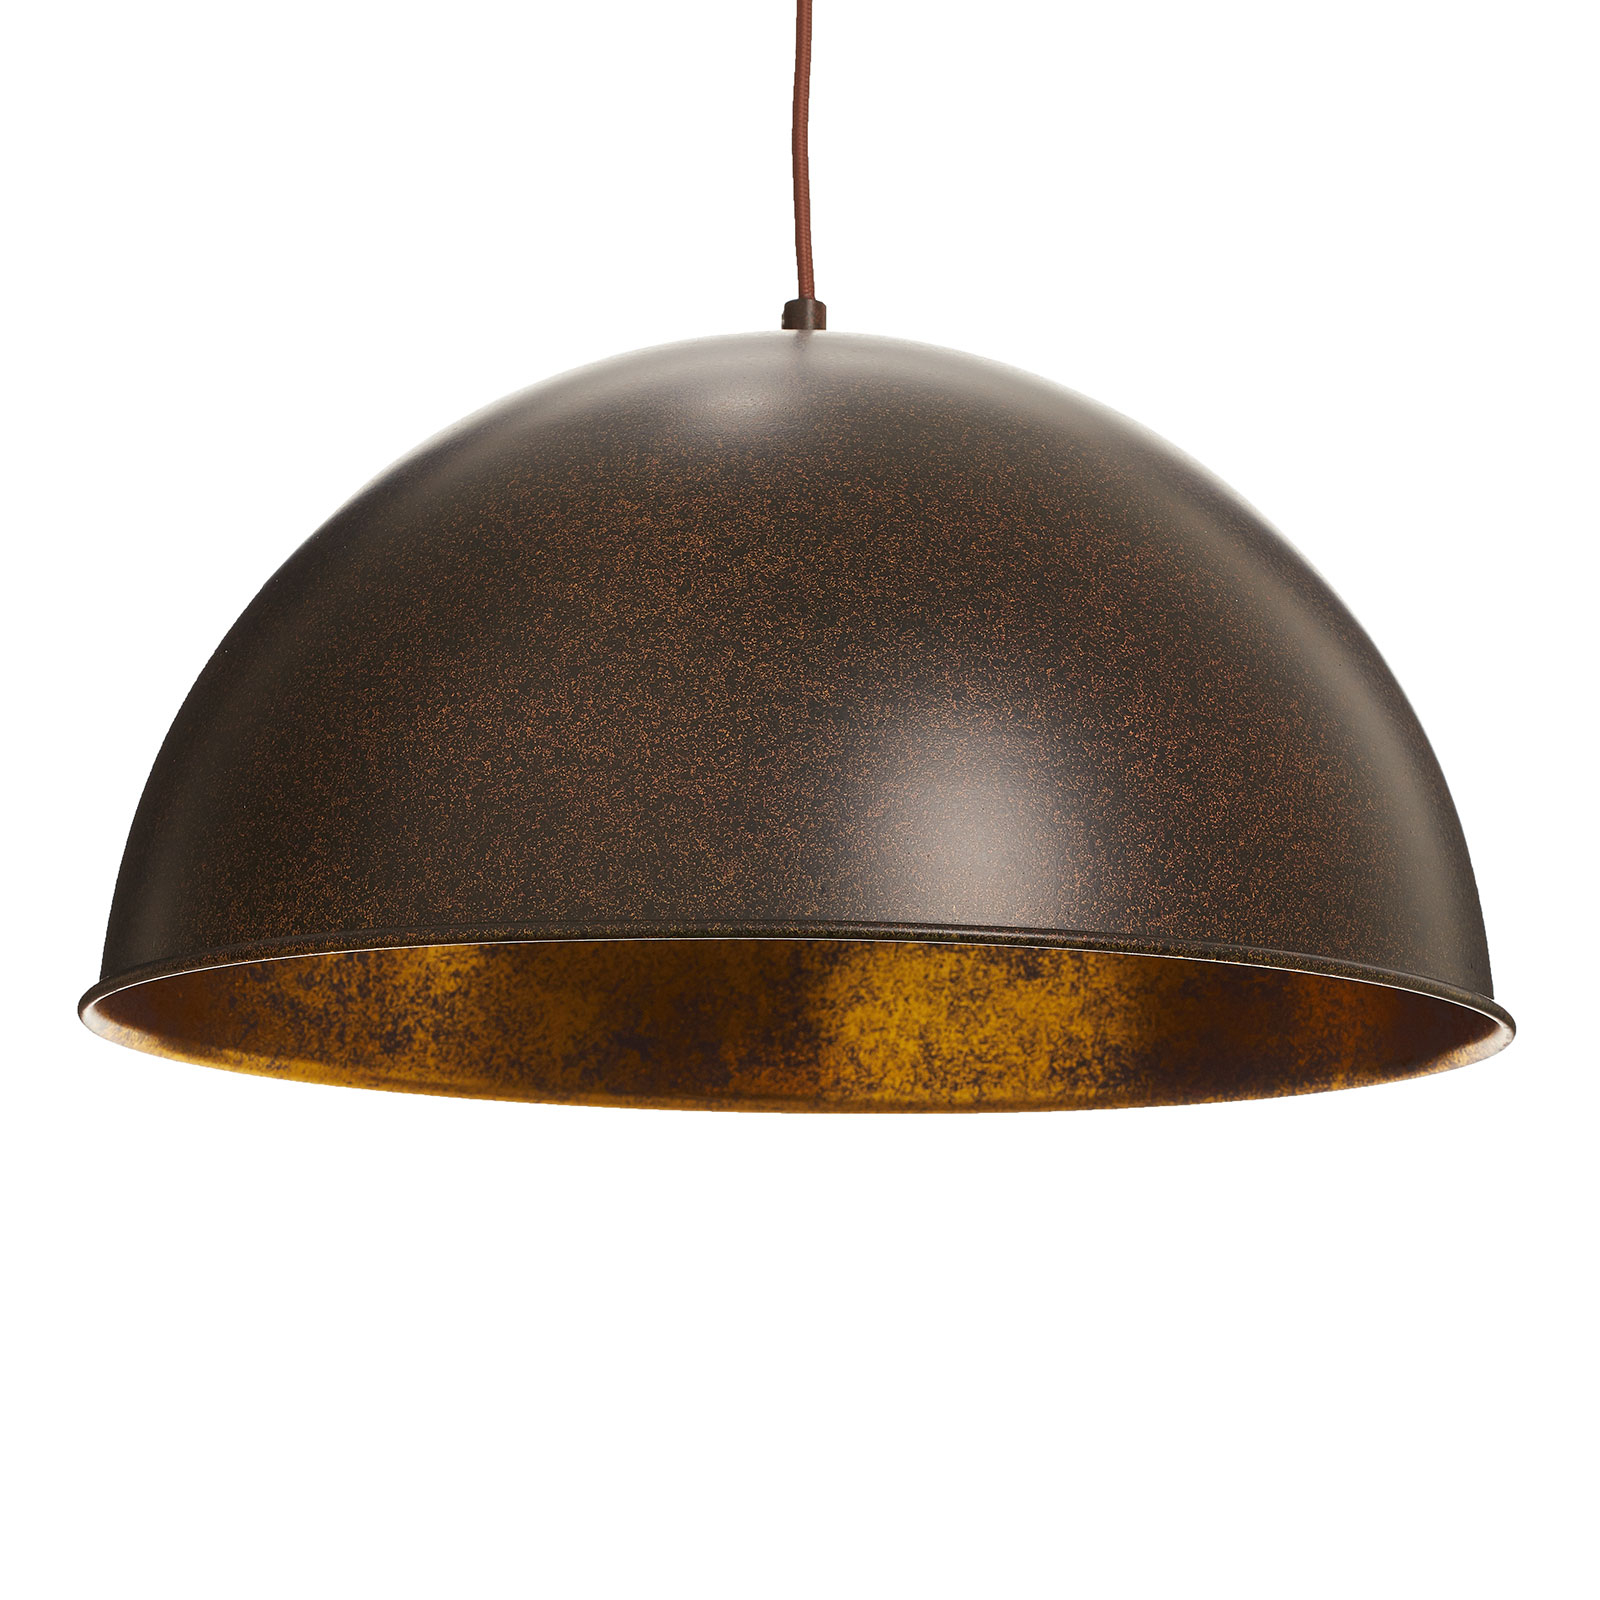 Xirena I rust-coloured metal pendant lamp